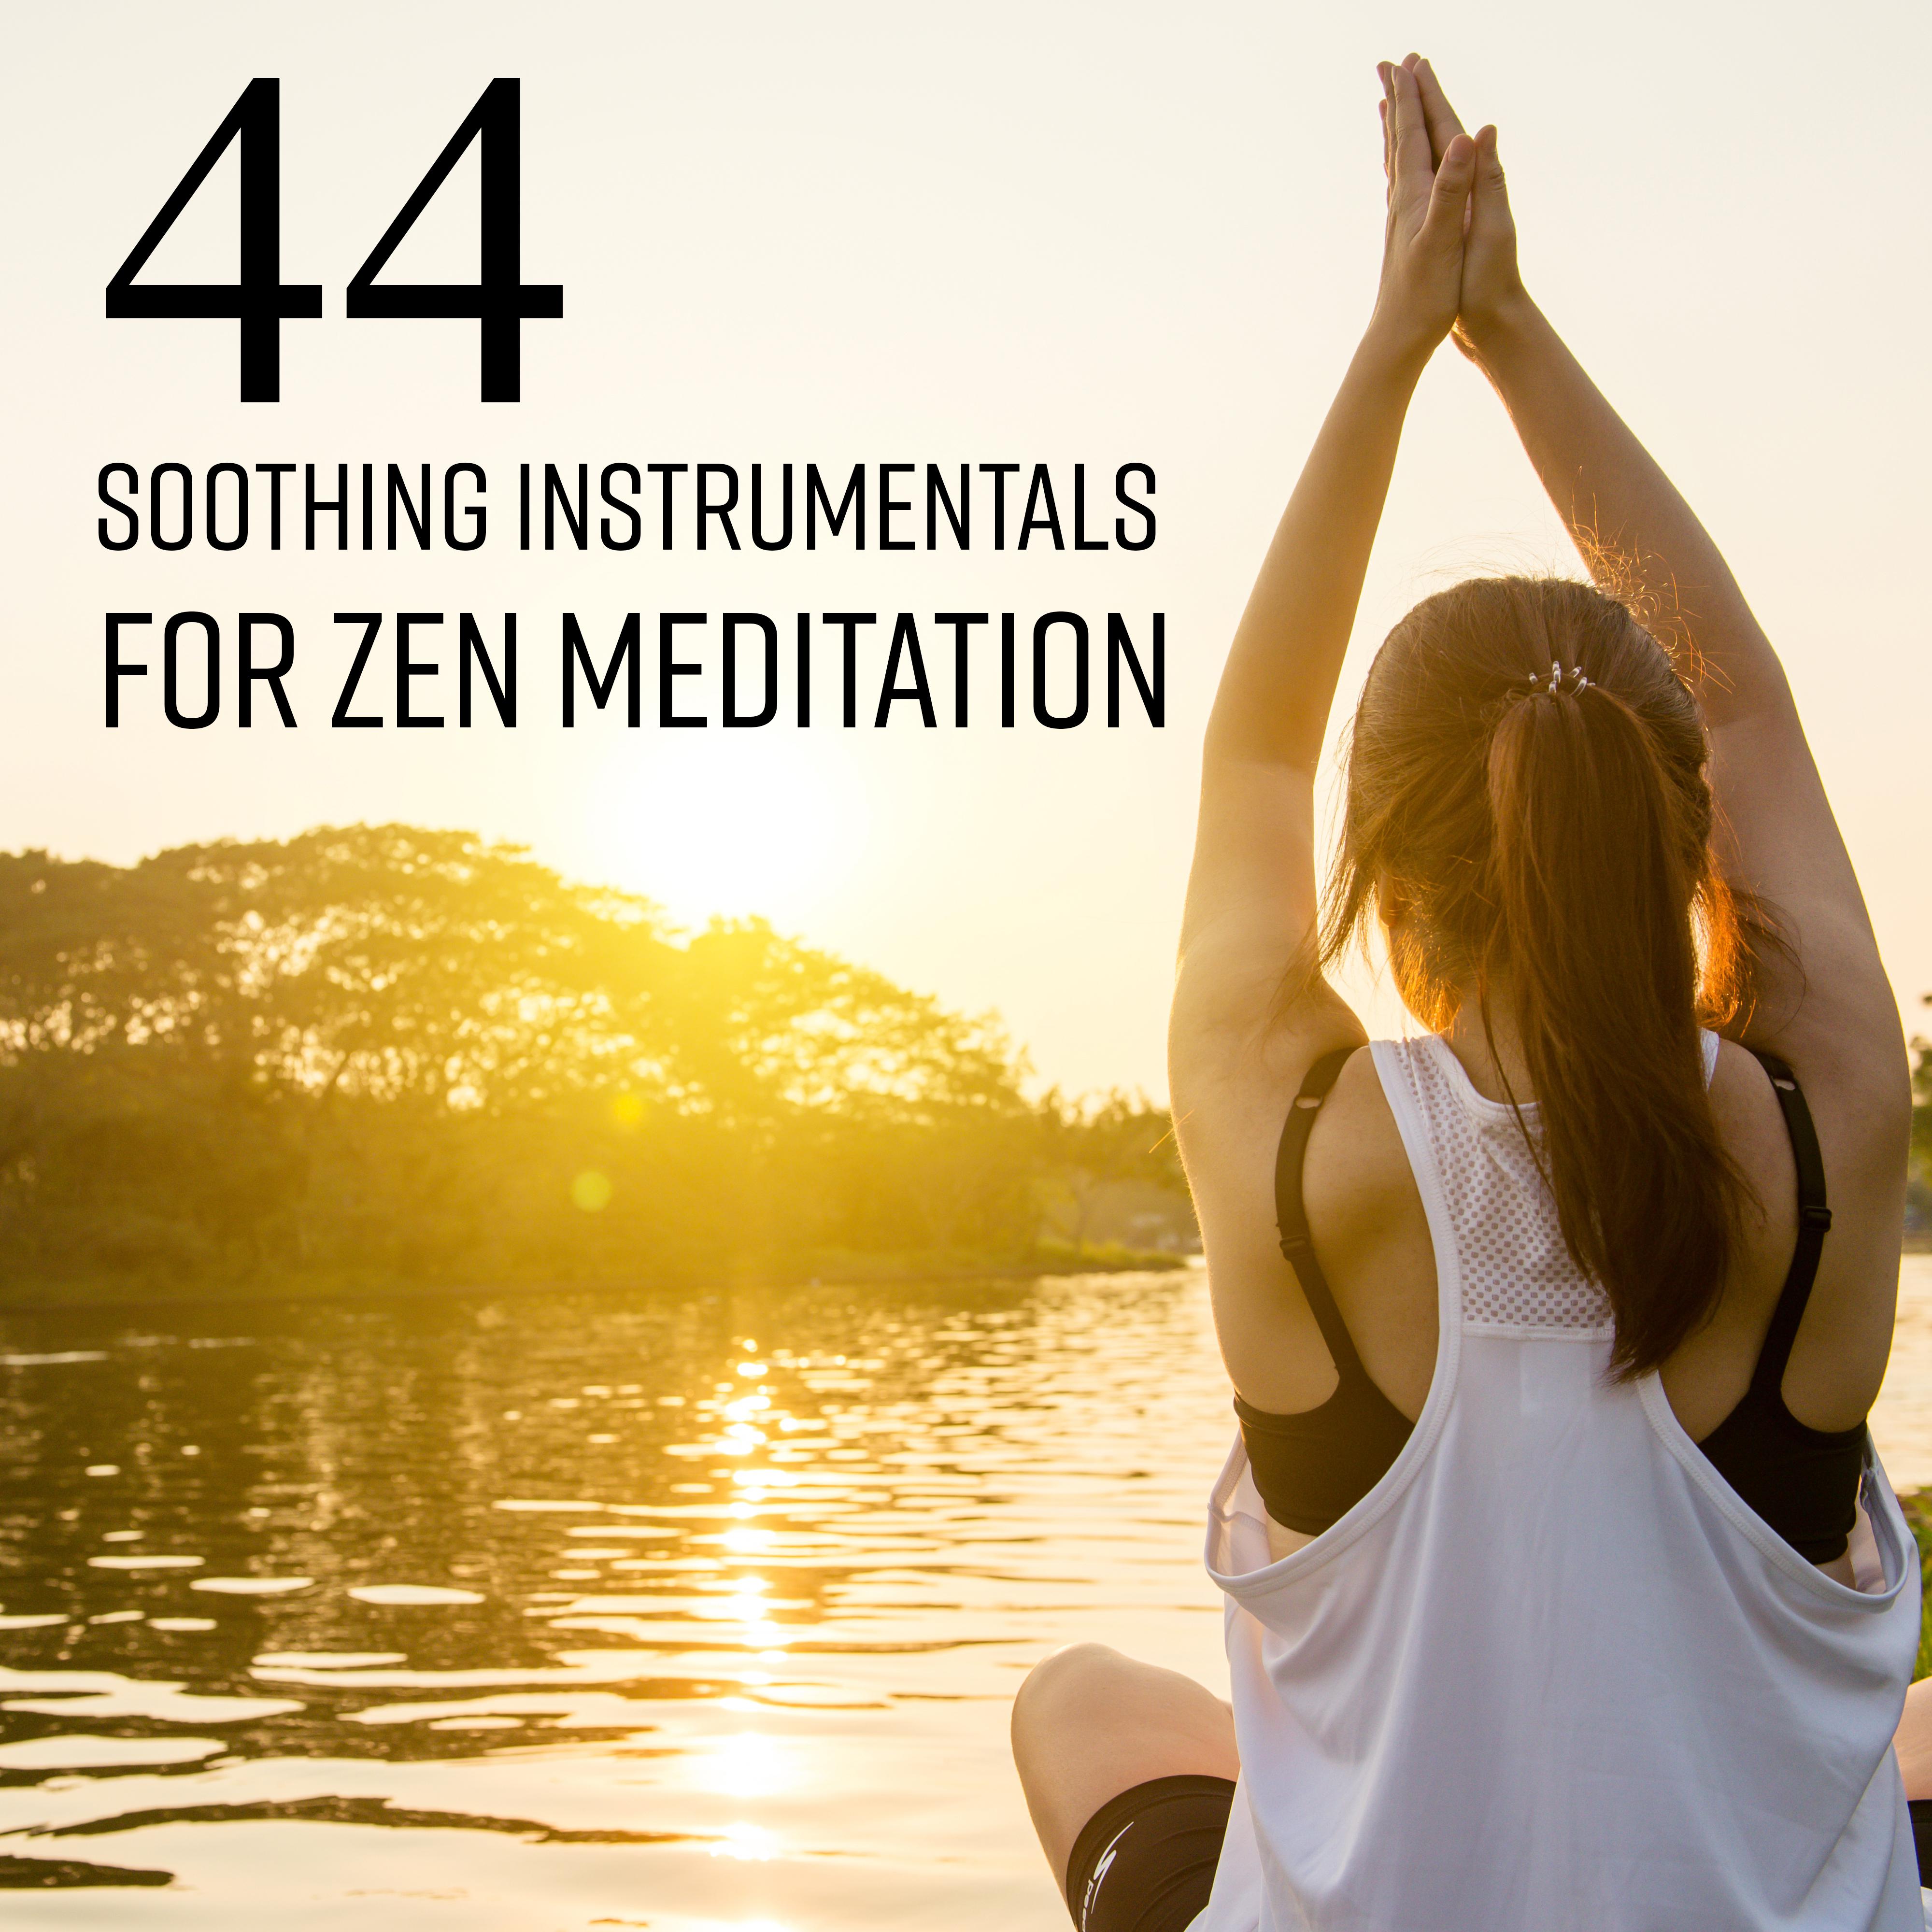 44 Soothing Instrumentals for Zen Meditation